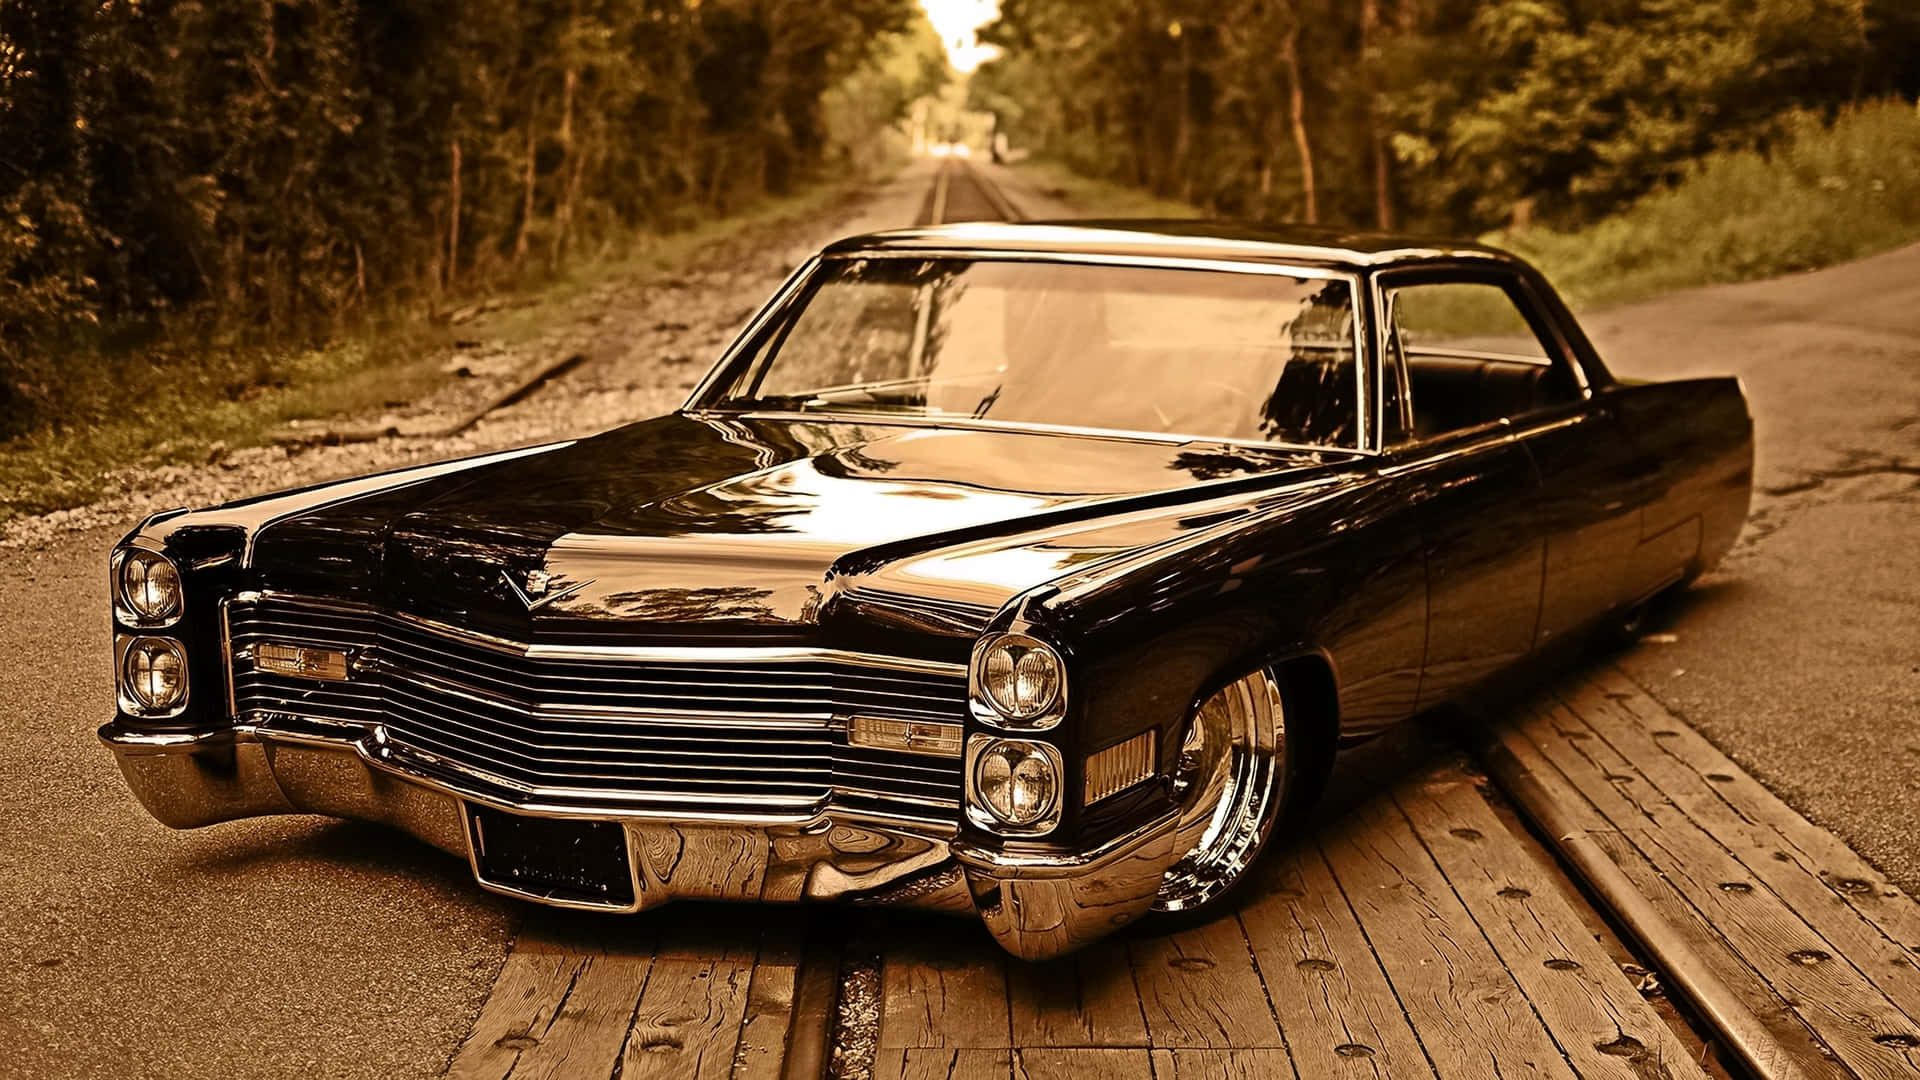 Caption: Classic Cadillac Deville in its Natural Habitat Wallpaper